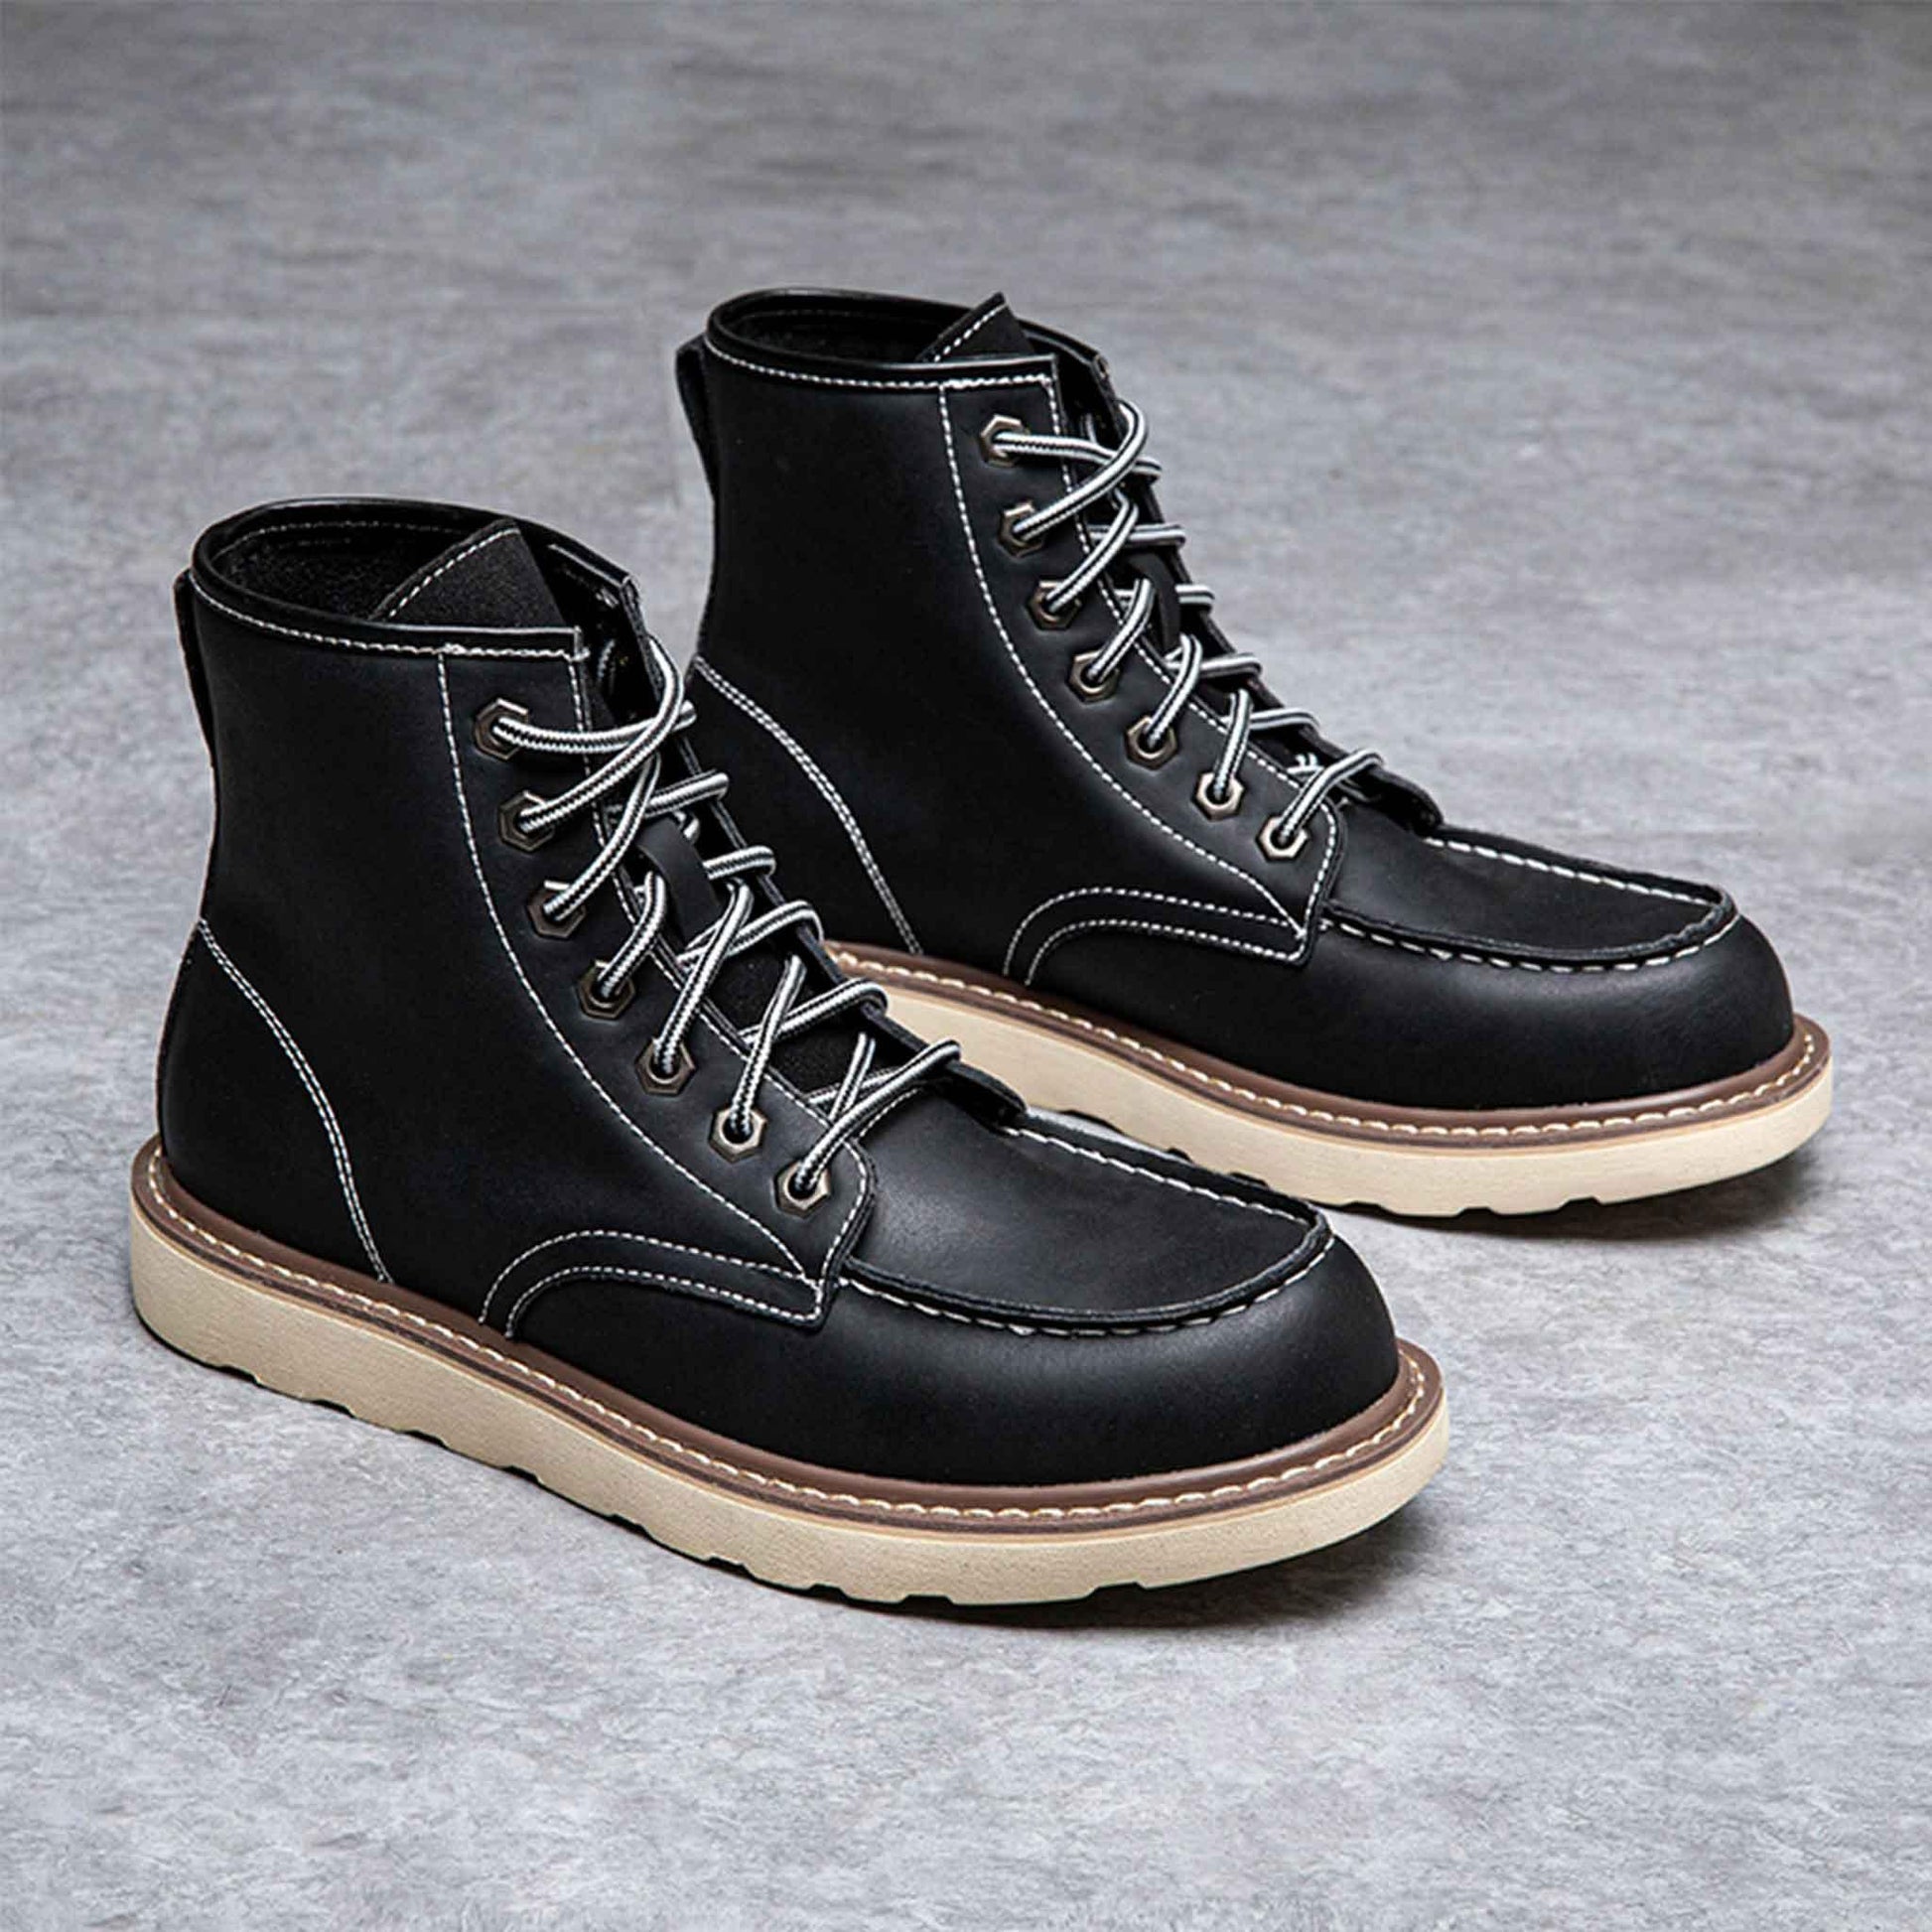 Men's 6" Soft Toe Work Boots - Classic Moc | C001 - USINE PRO Footwear